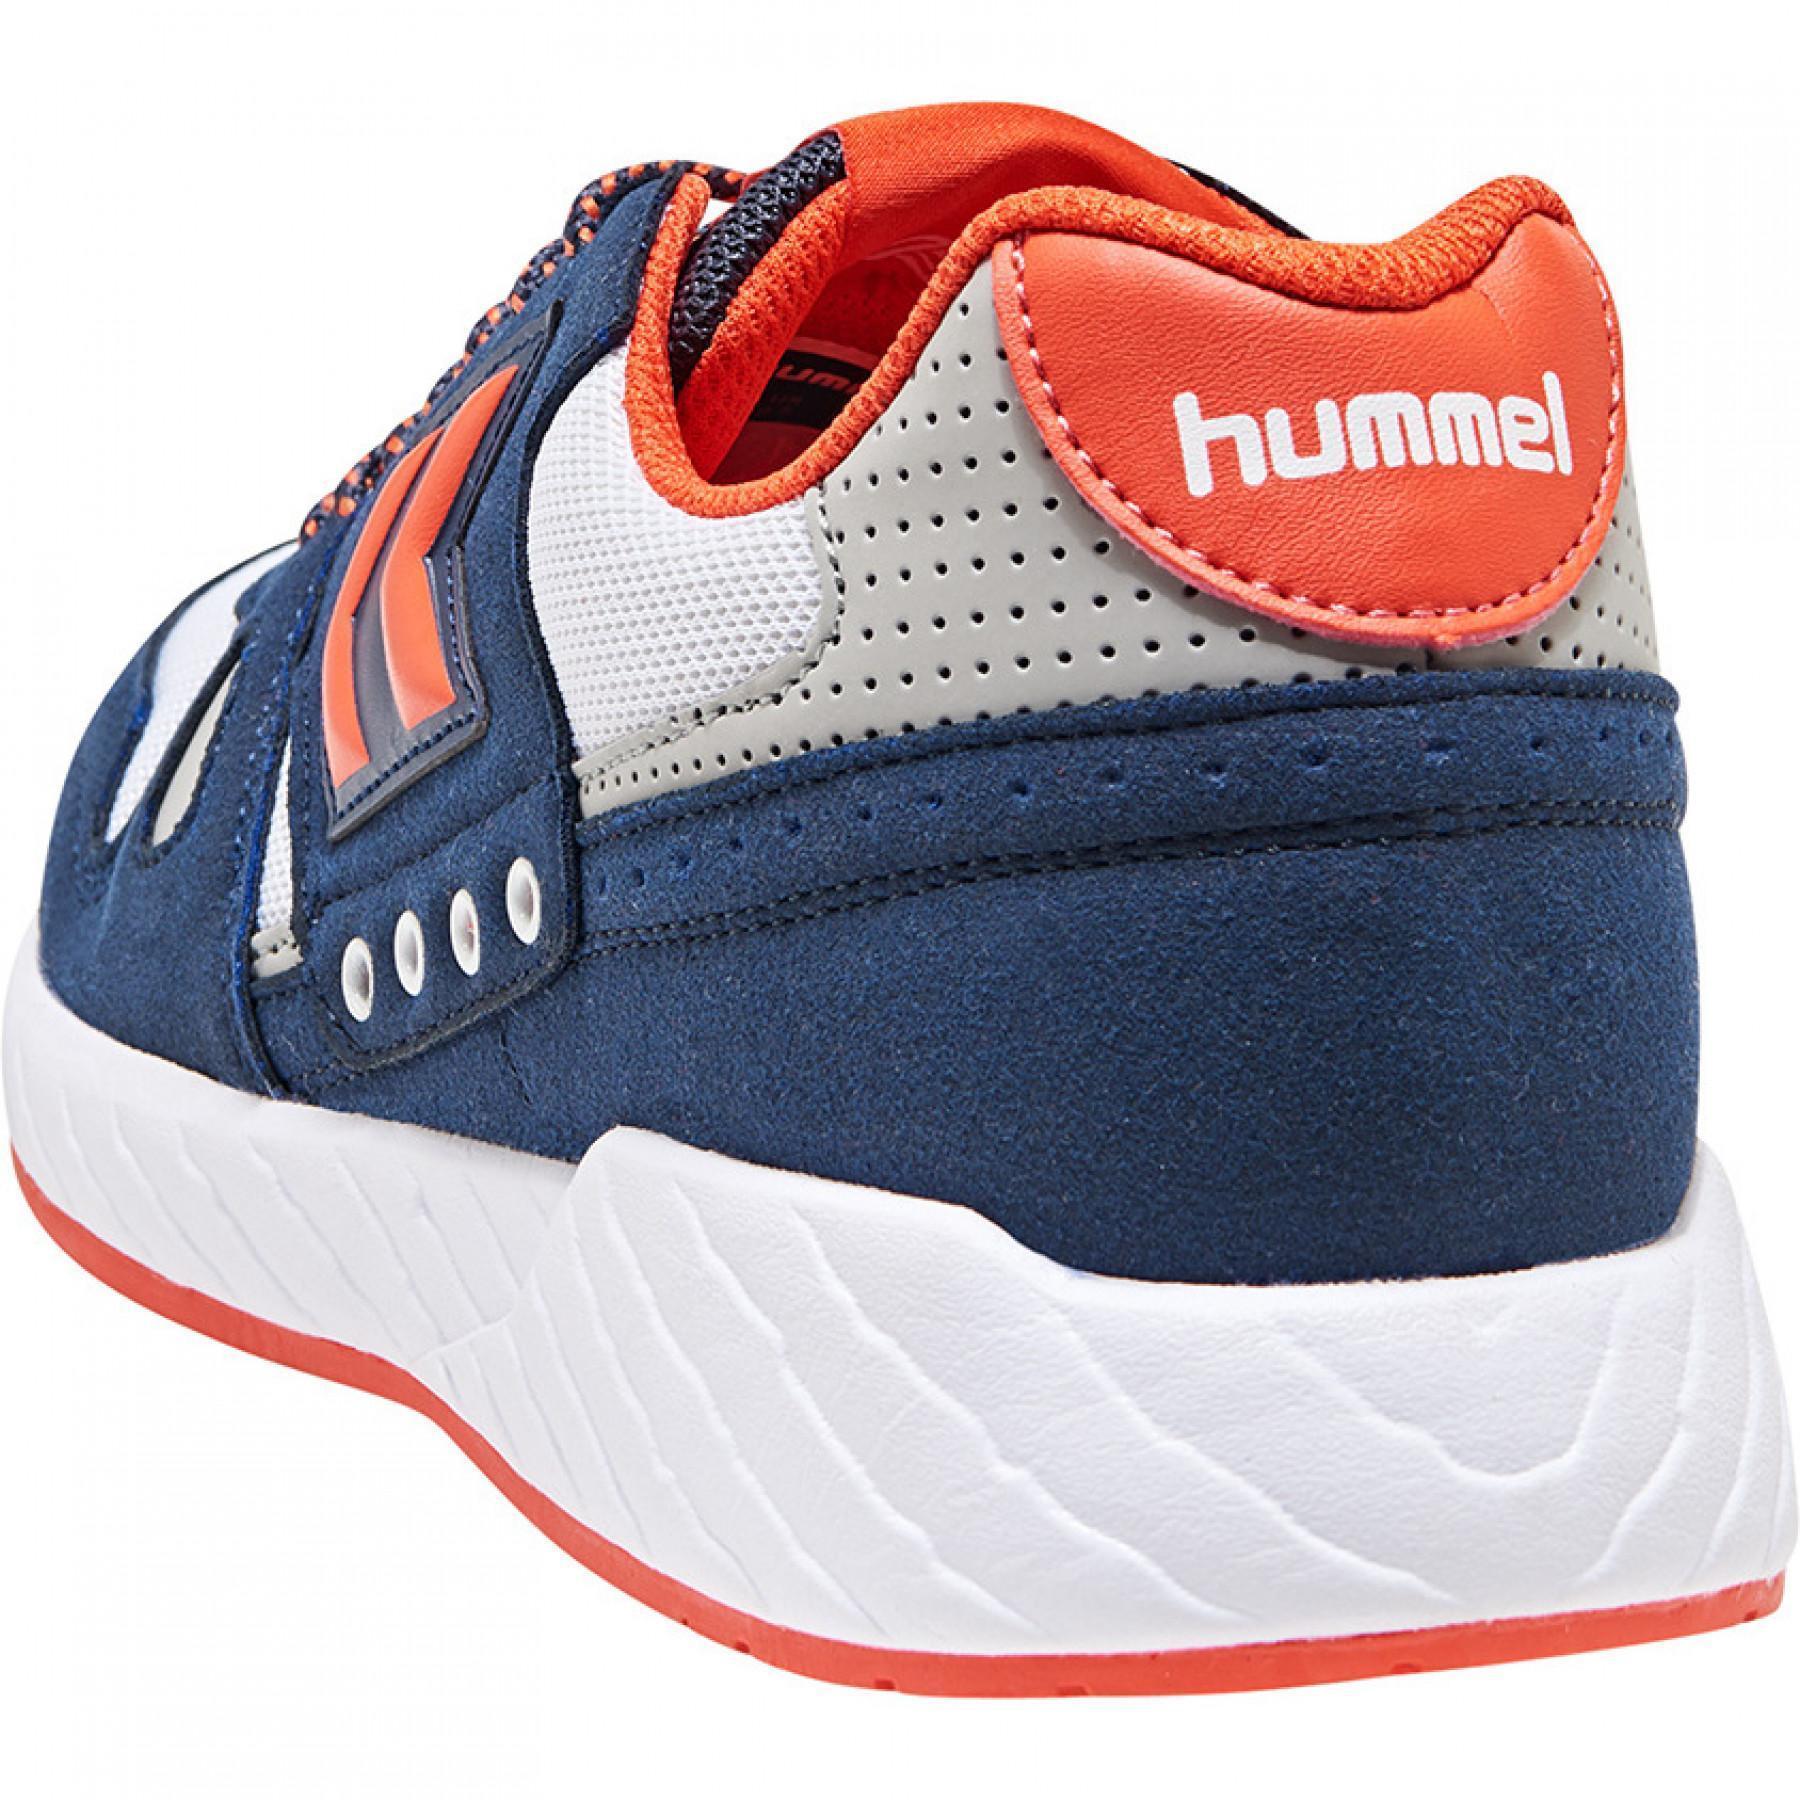 Sneakers Hummel legend marathona